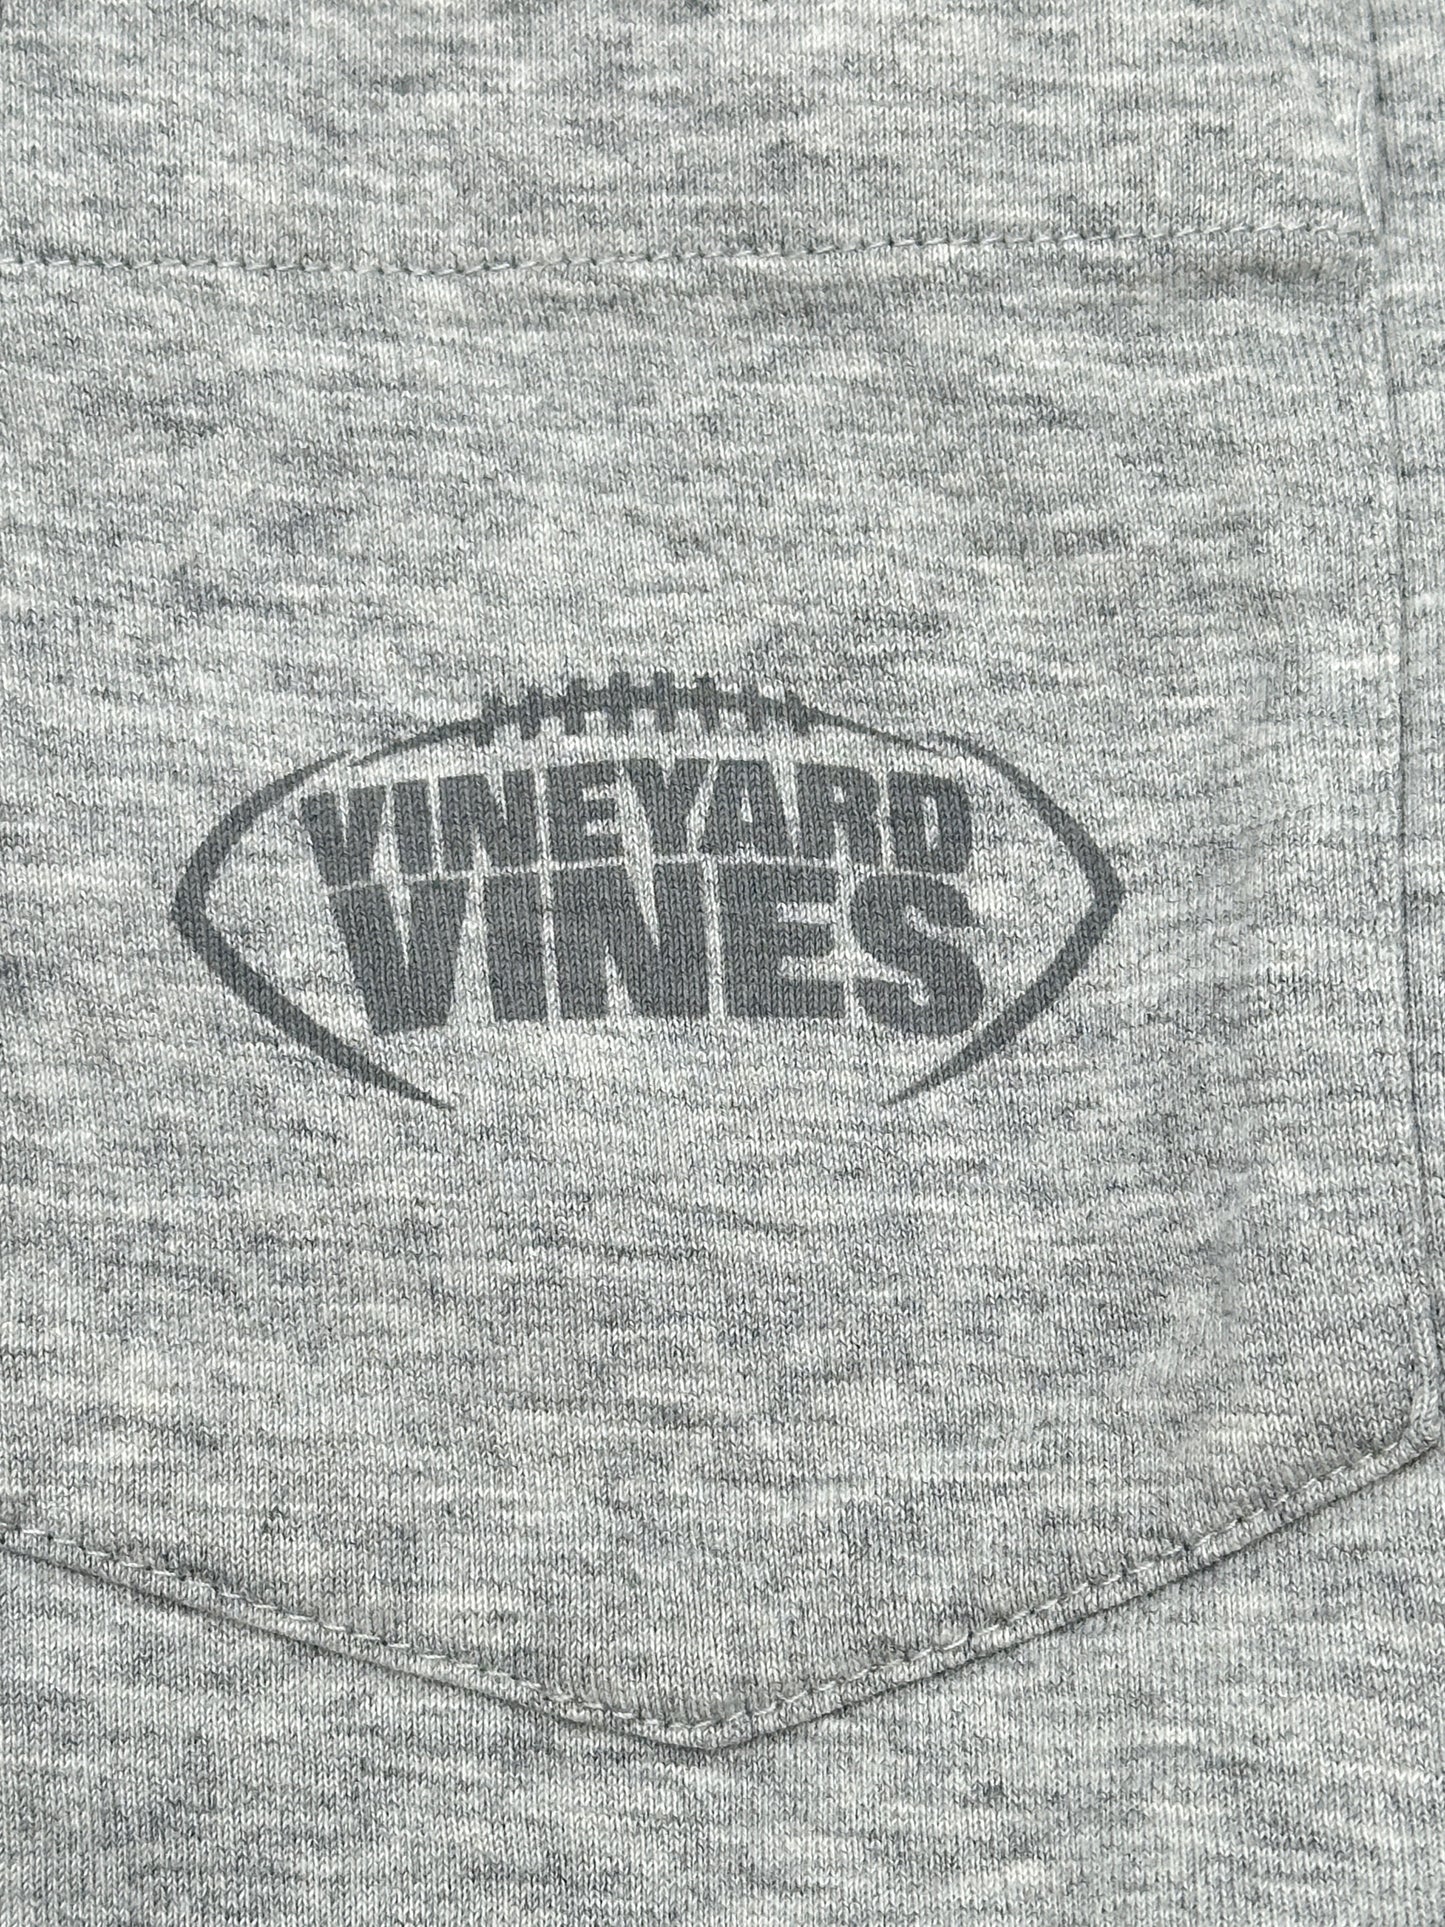 Vineyard Vines Men's Size XL Light Grey Football Laces Long-Sleeve Pullover Hoodie Pocket Tee